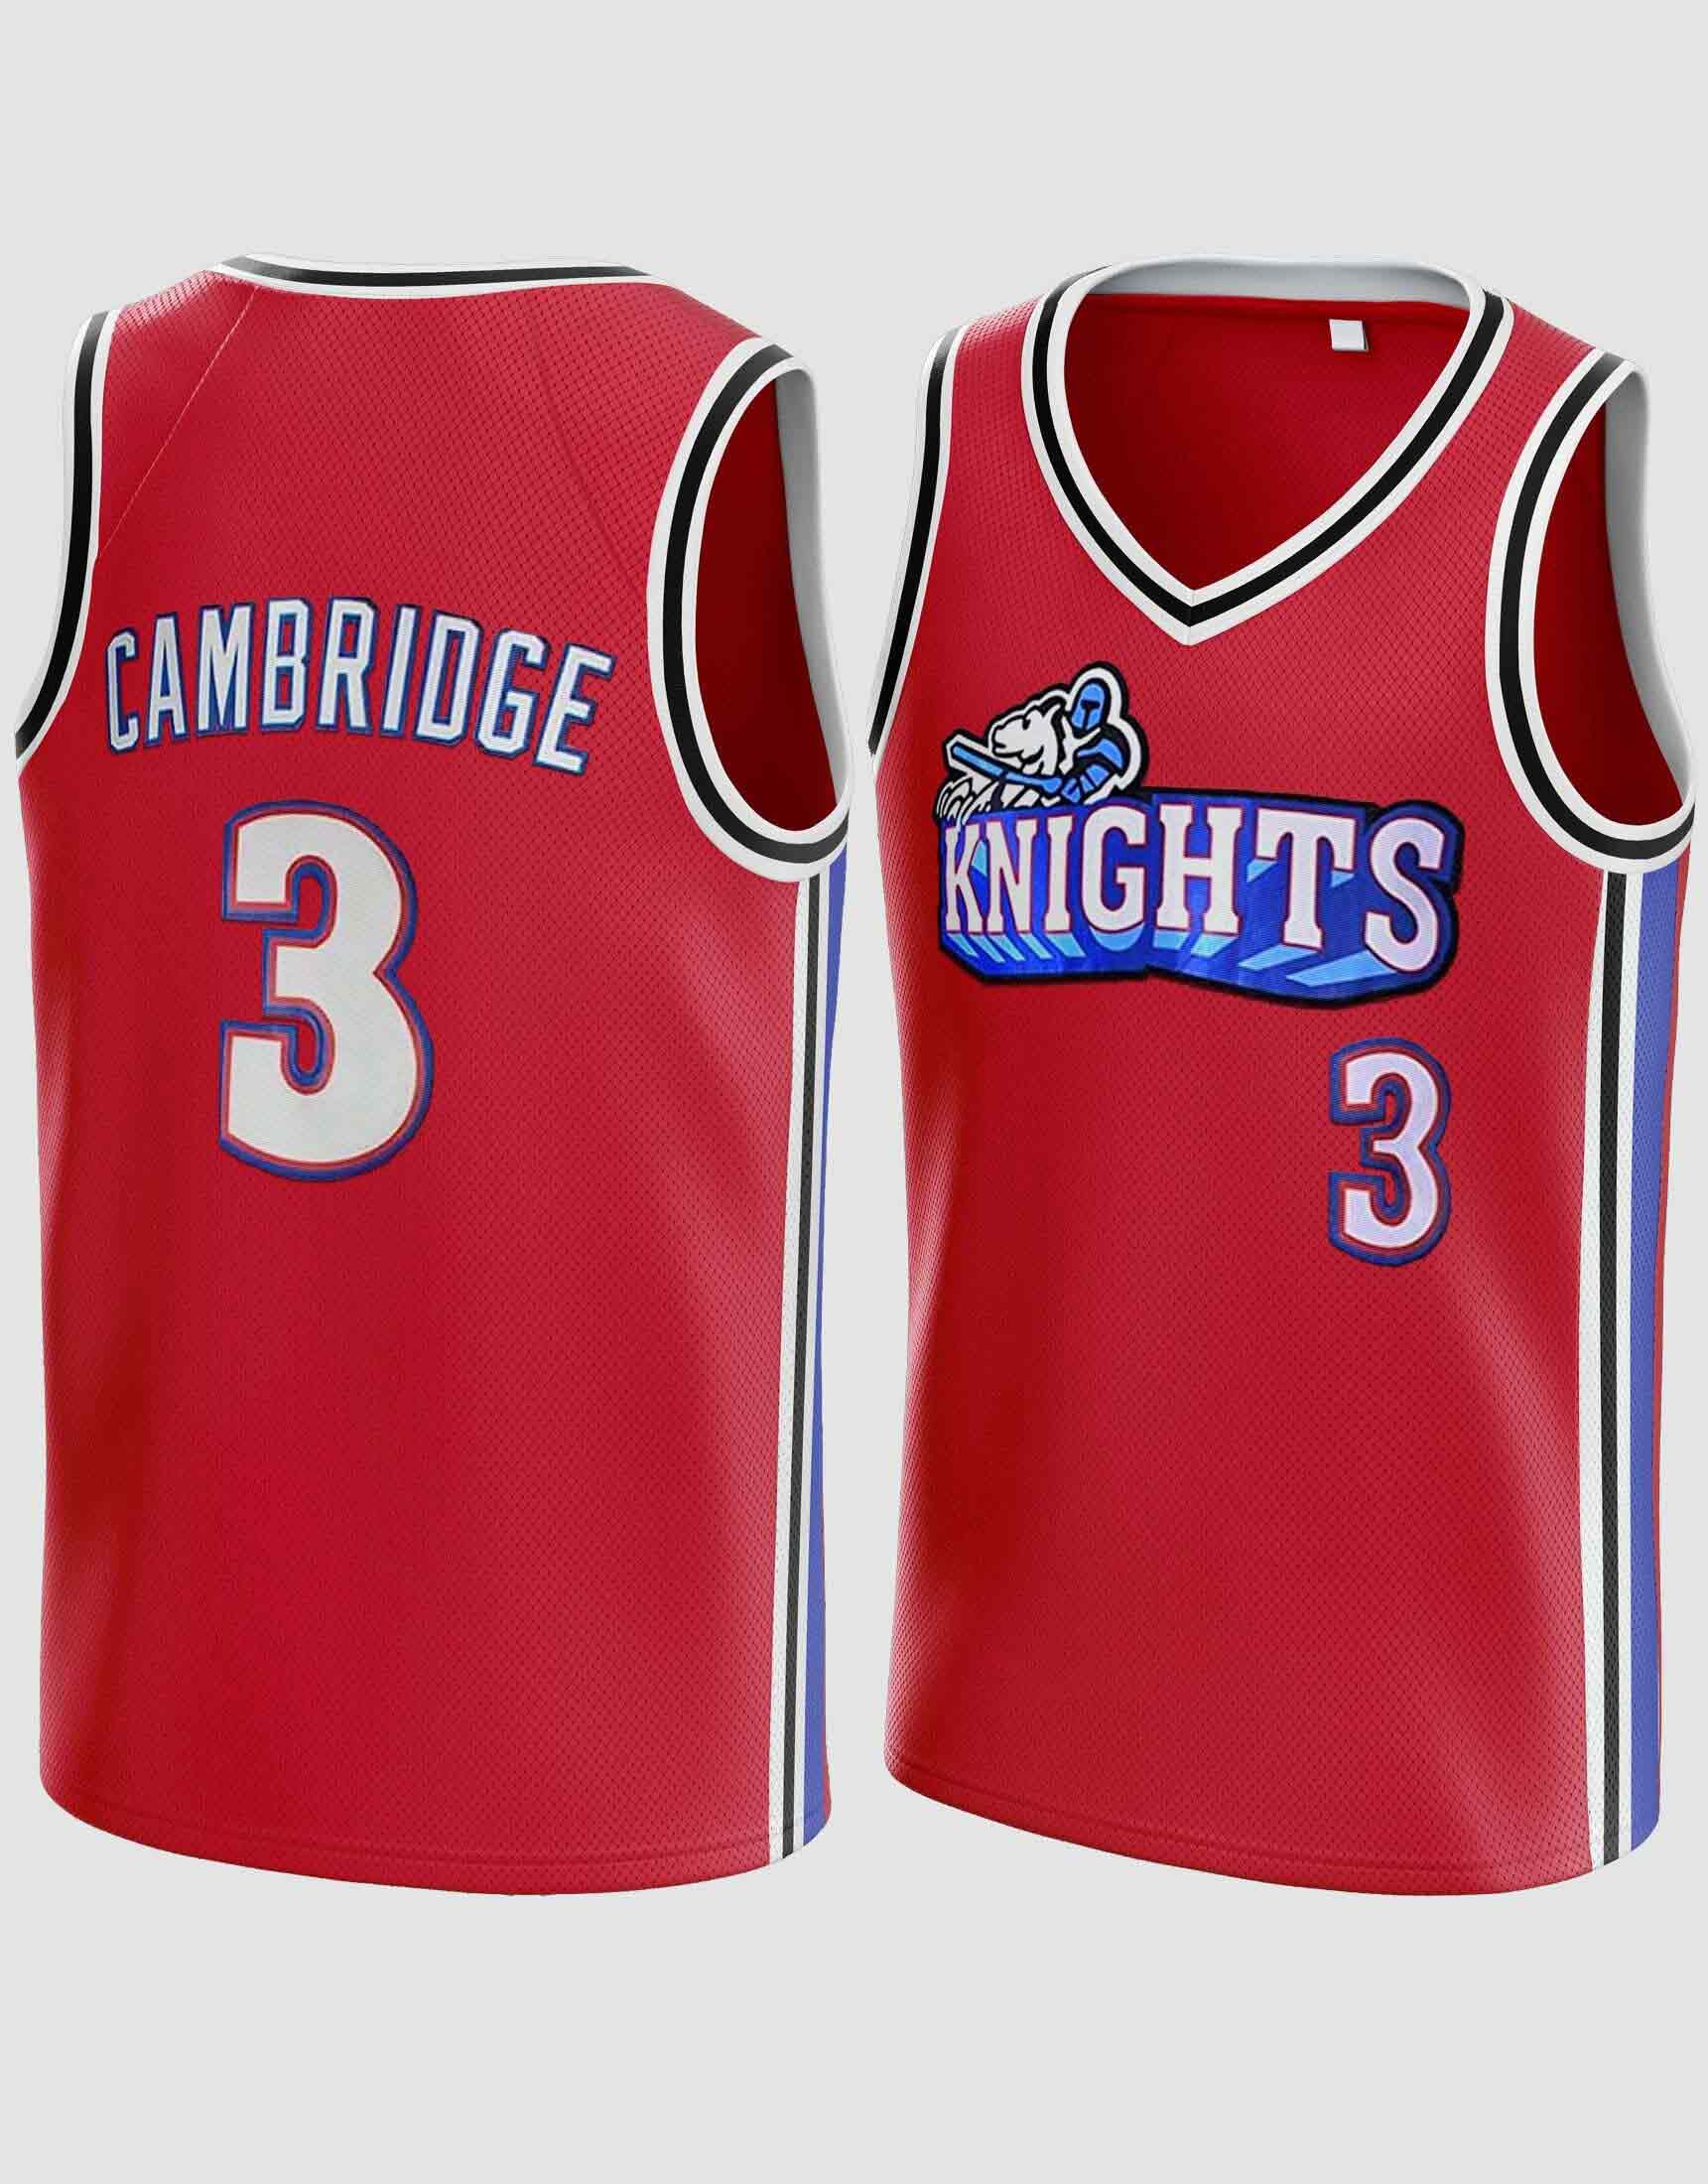 Calvin Cambridge La Knights Like Mike 3 Jersey – JerseyHouse